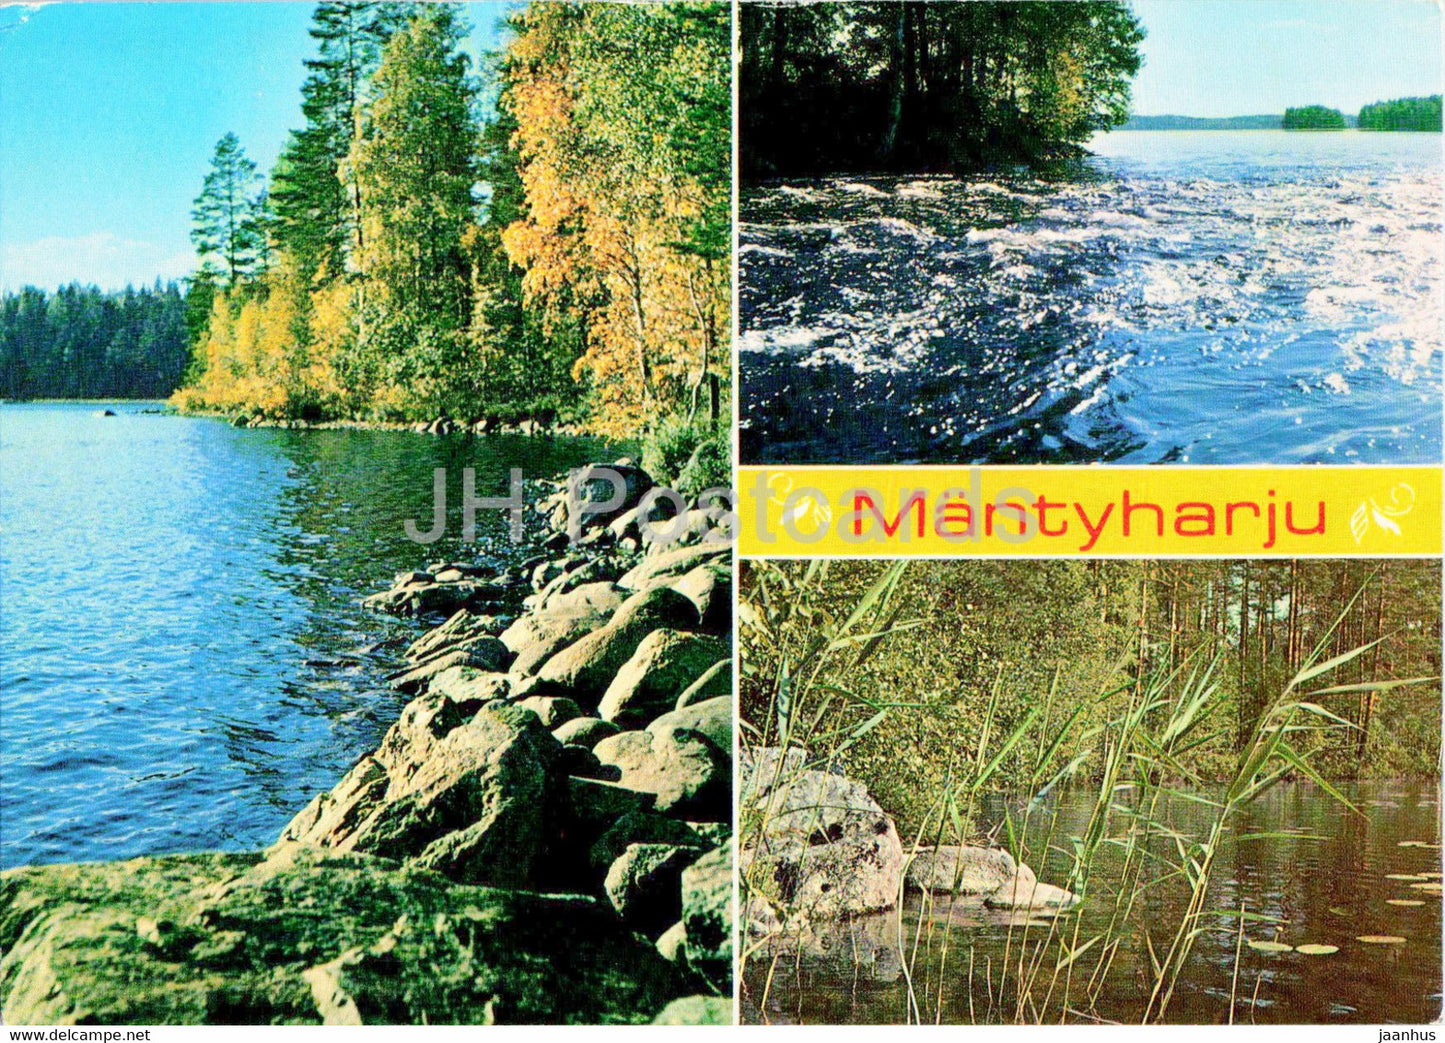 Mantyharju - 1980 - Finland - used - JH Postcards